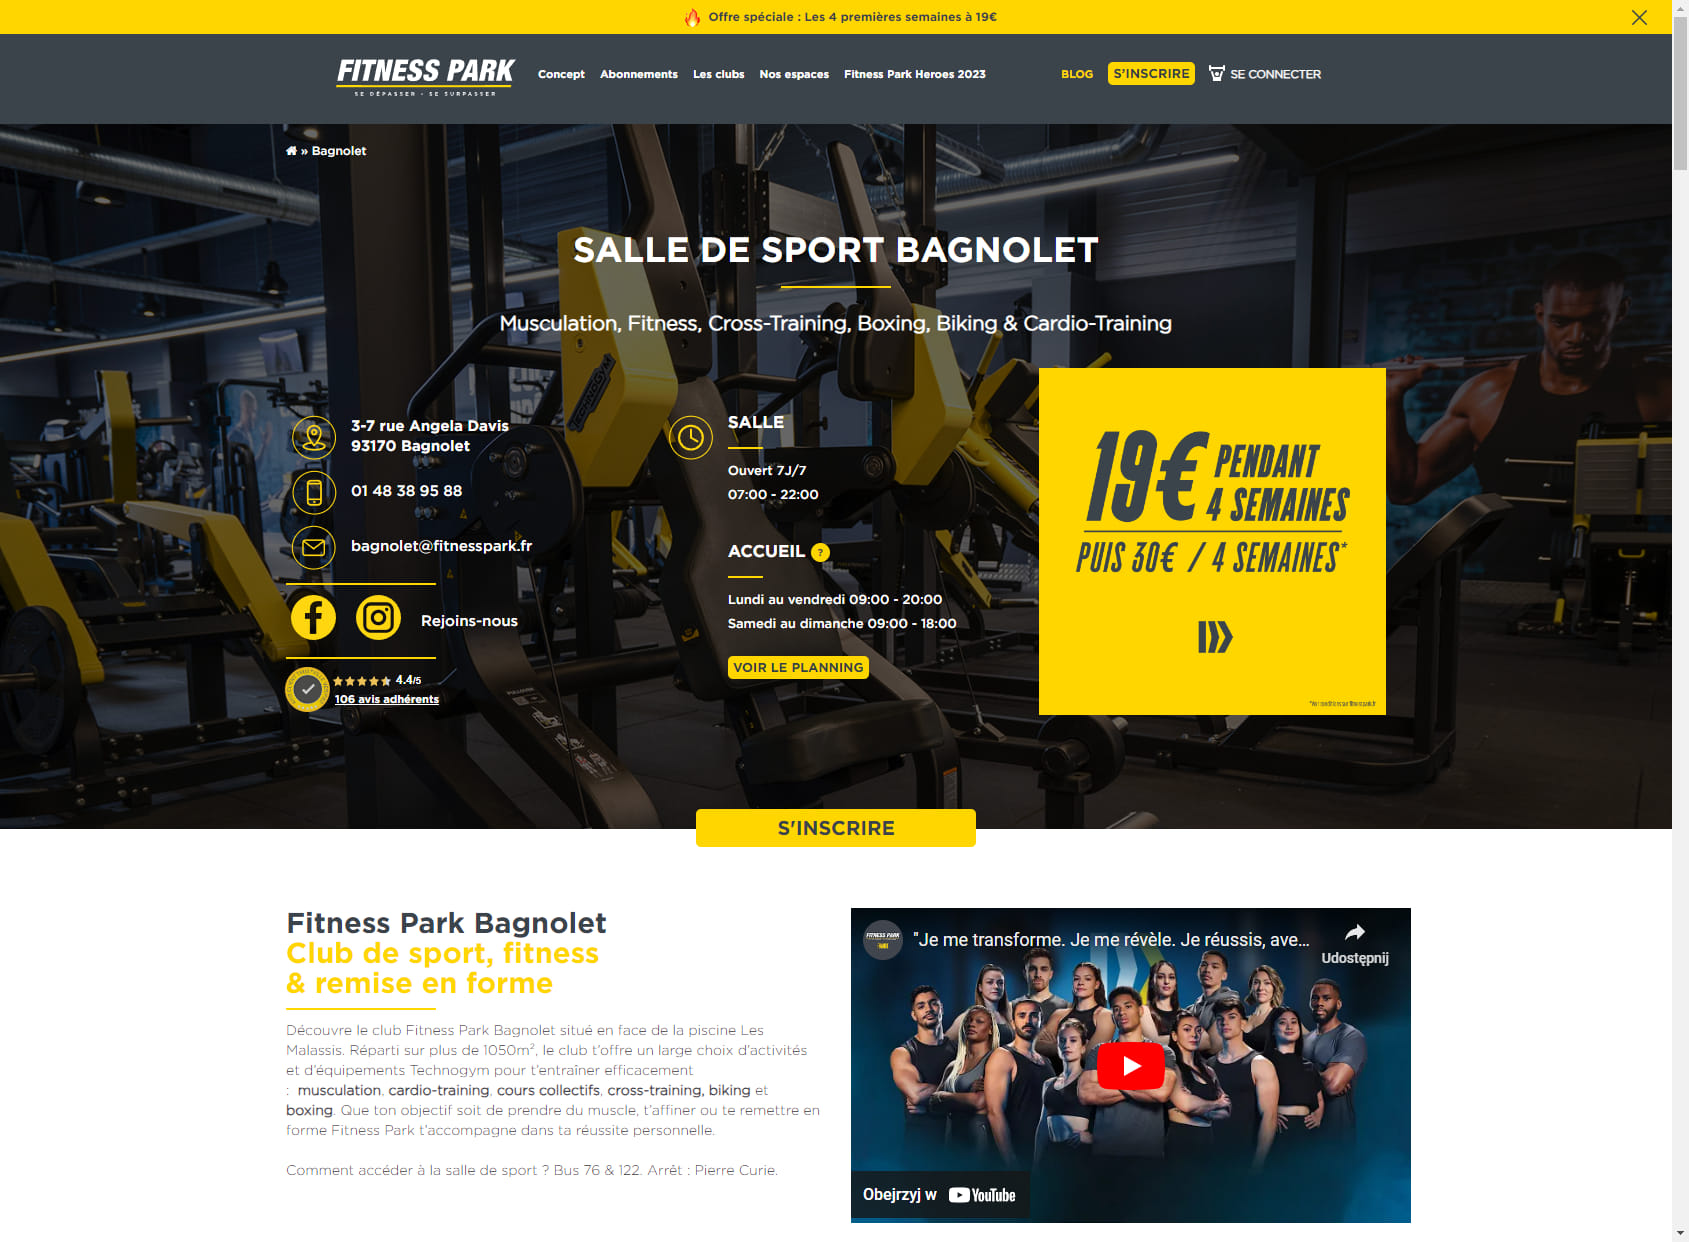 Salle de sport Bagnolet - Fitness Park